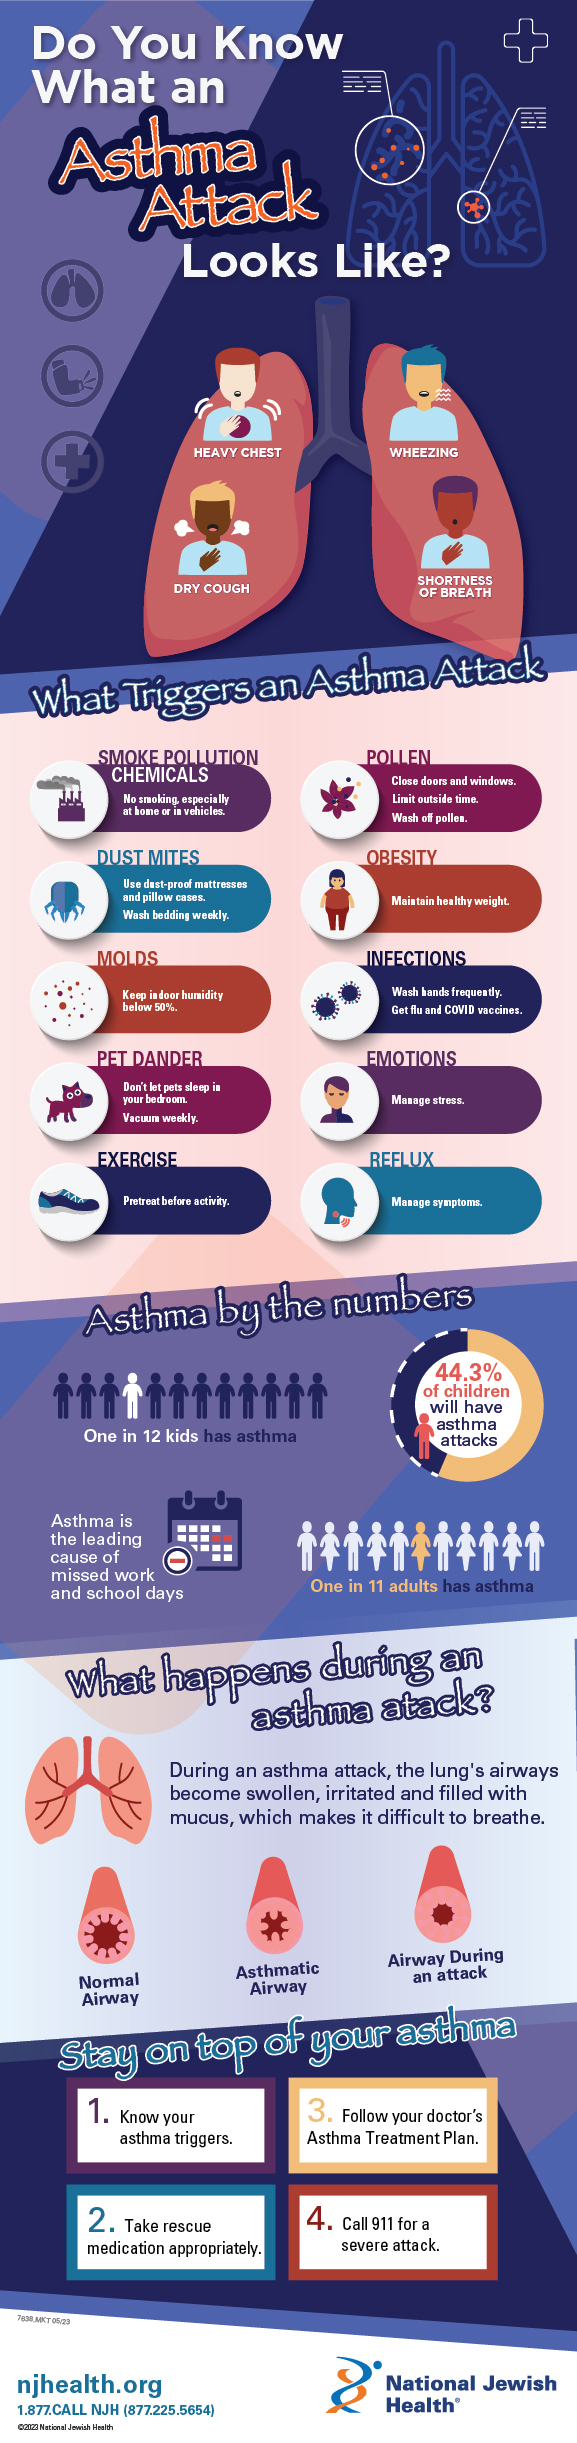 Asthma Attack Symptom infographic